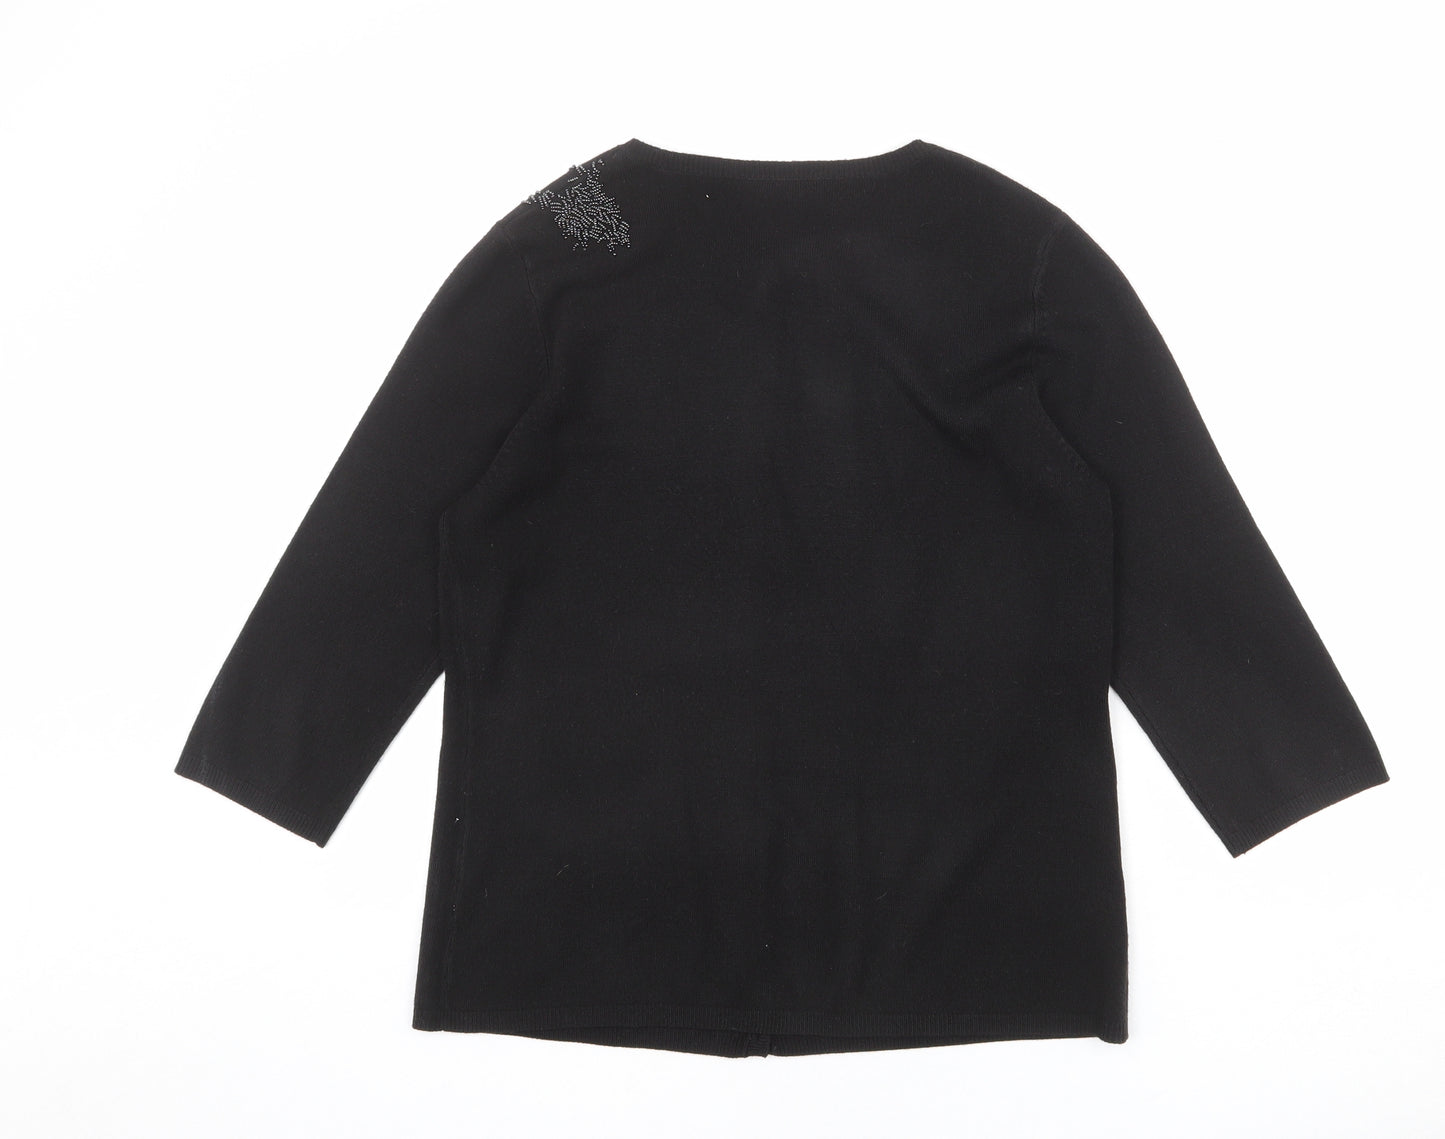 BHS Womens Black Round Neck Acrylic Cardigan Jumper Size 14